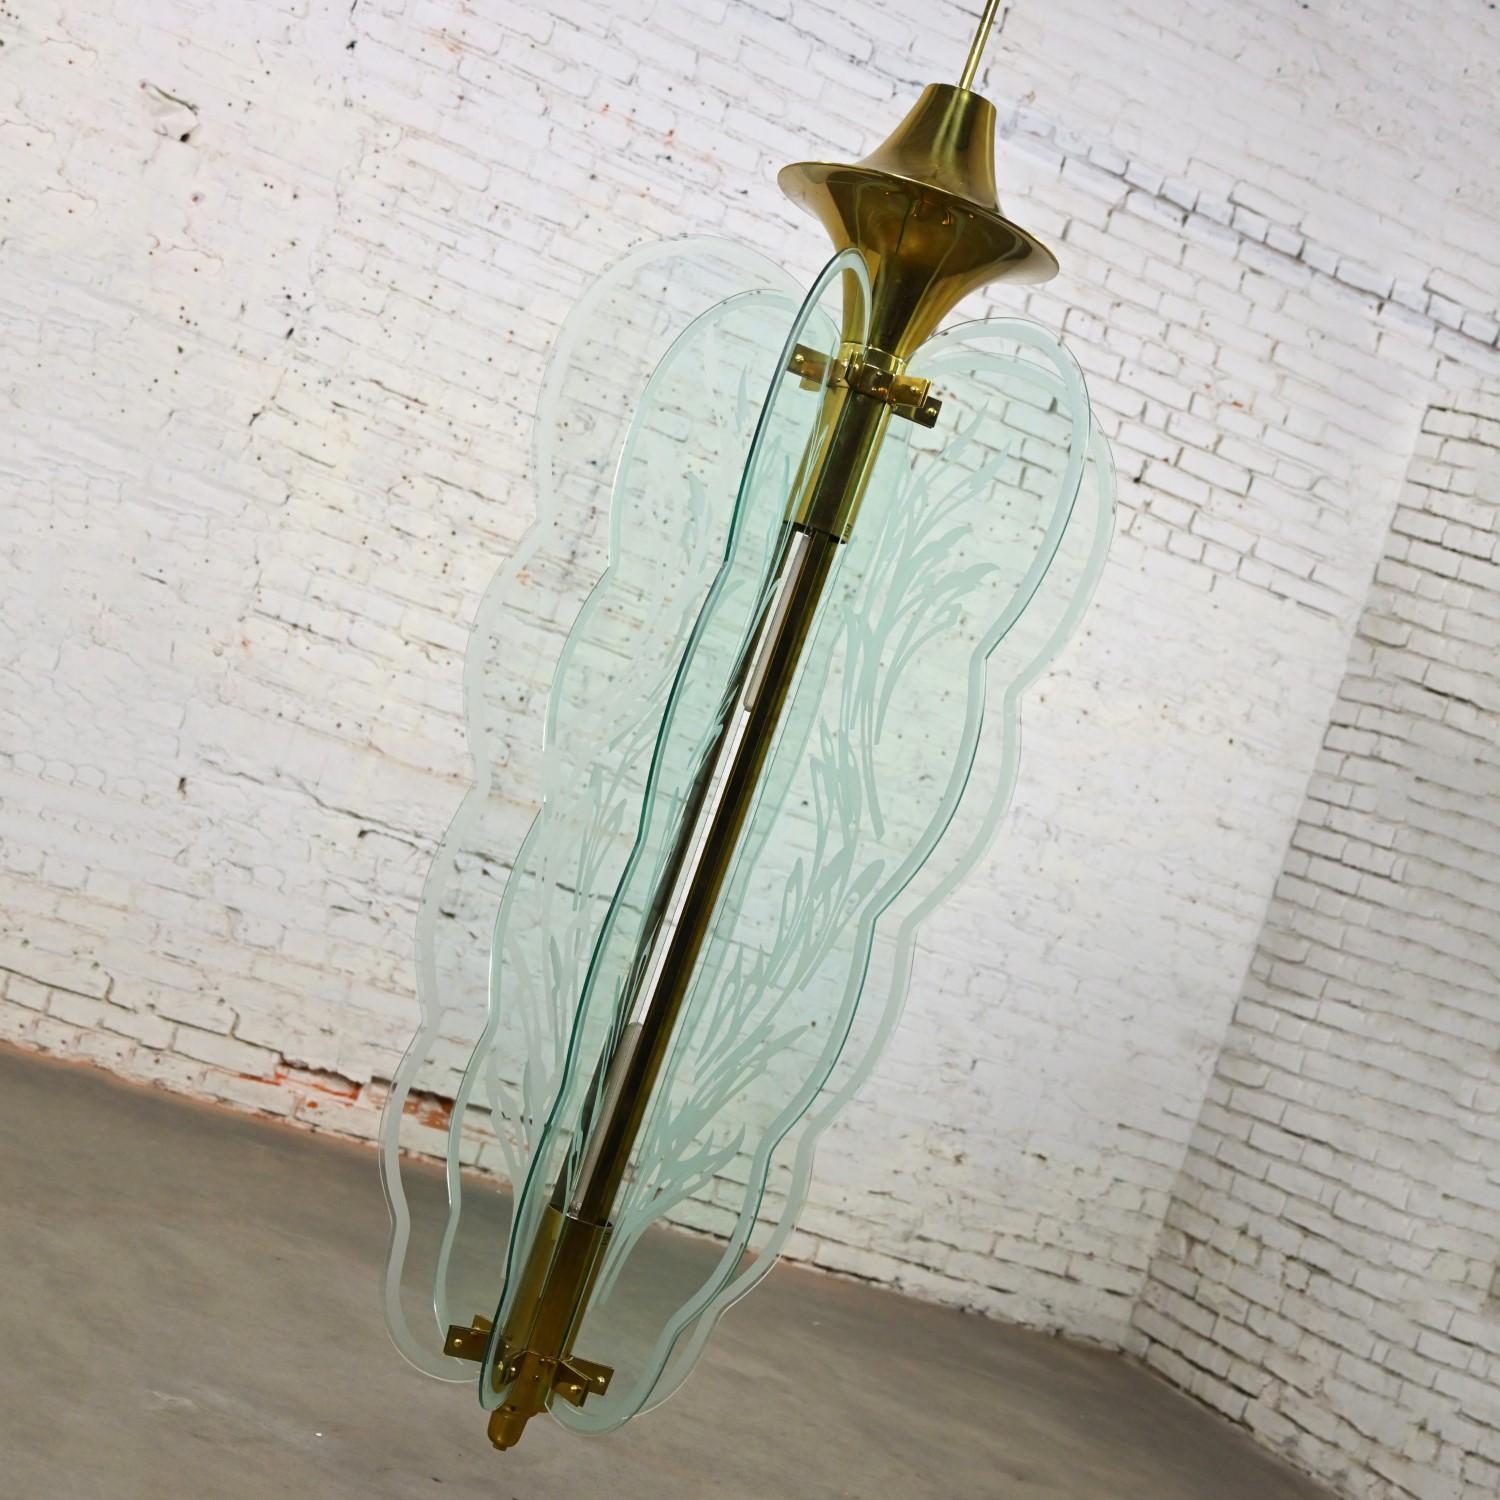 Art Deco Revival Monumental Brass Etched Glass Hanging Light Fixture Chandelier For Sale 8